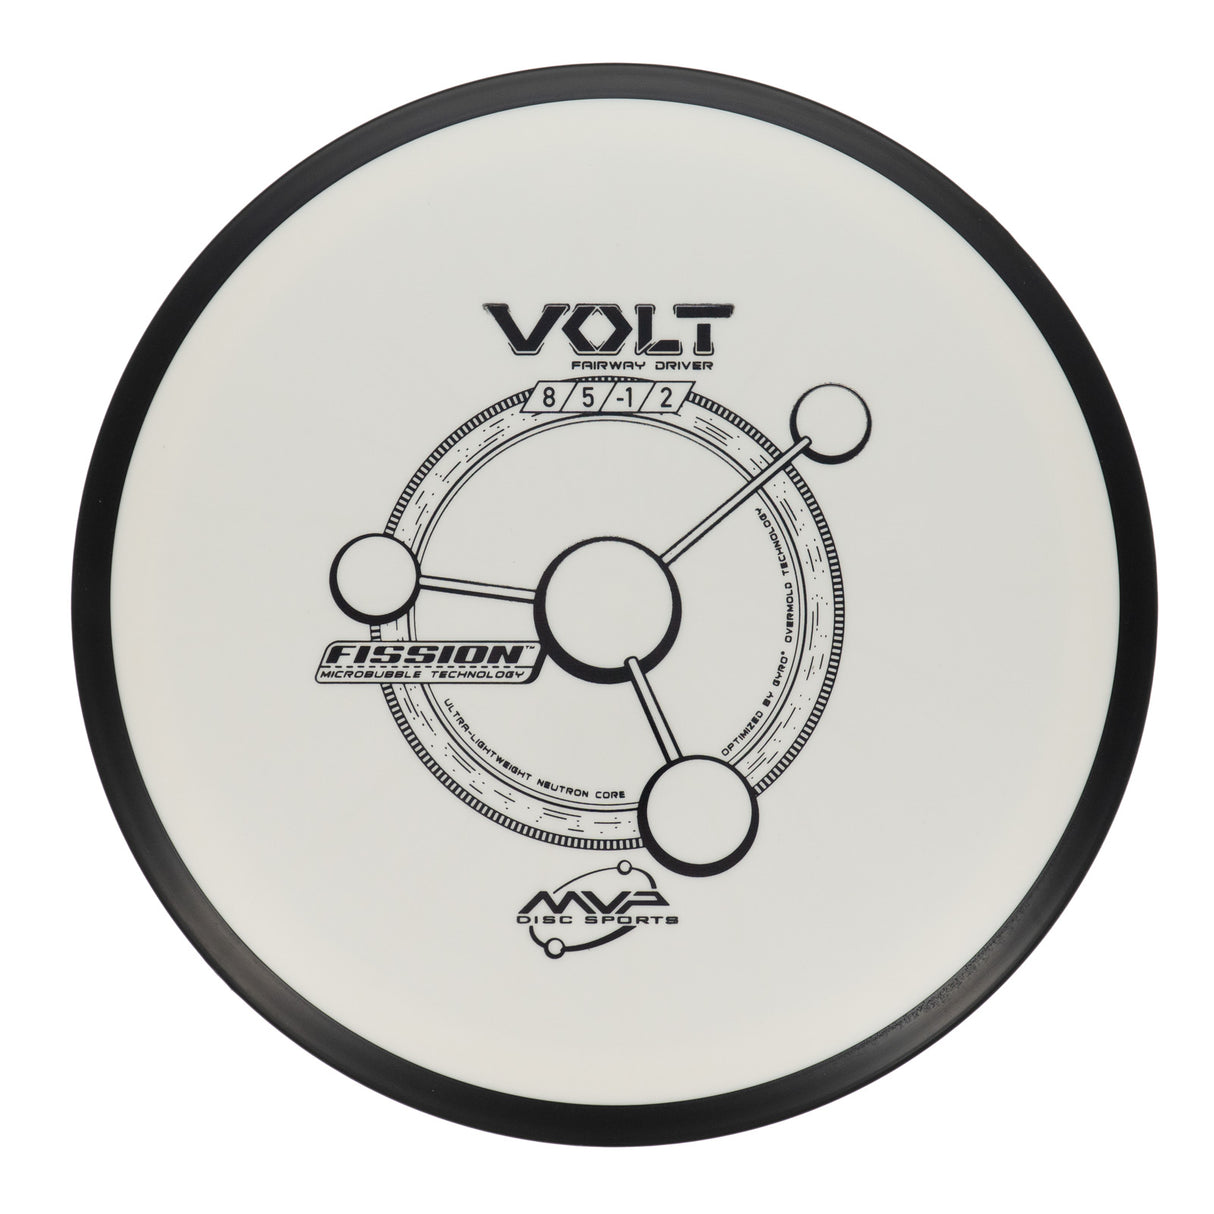 MVP Volt - Fission 161g | Style 0002